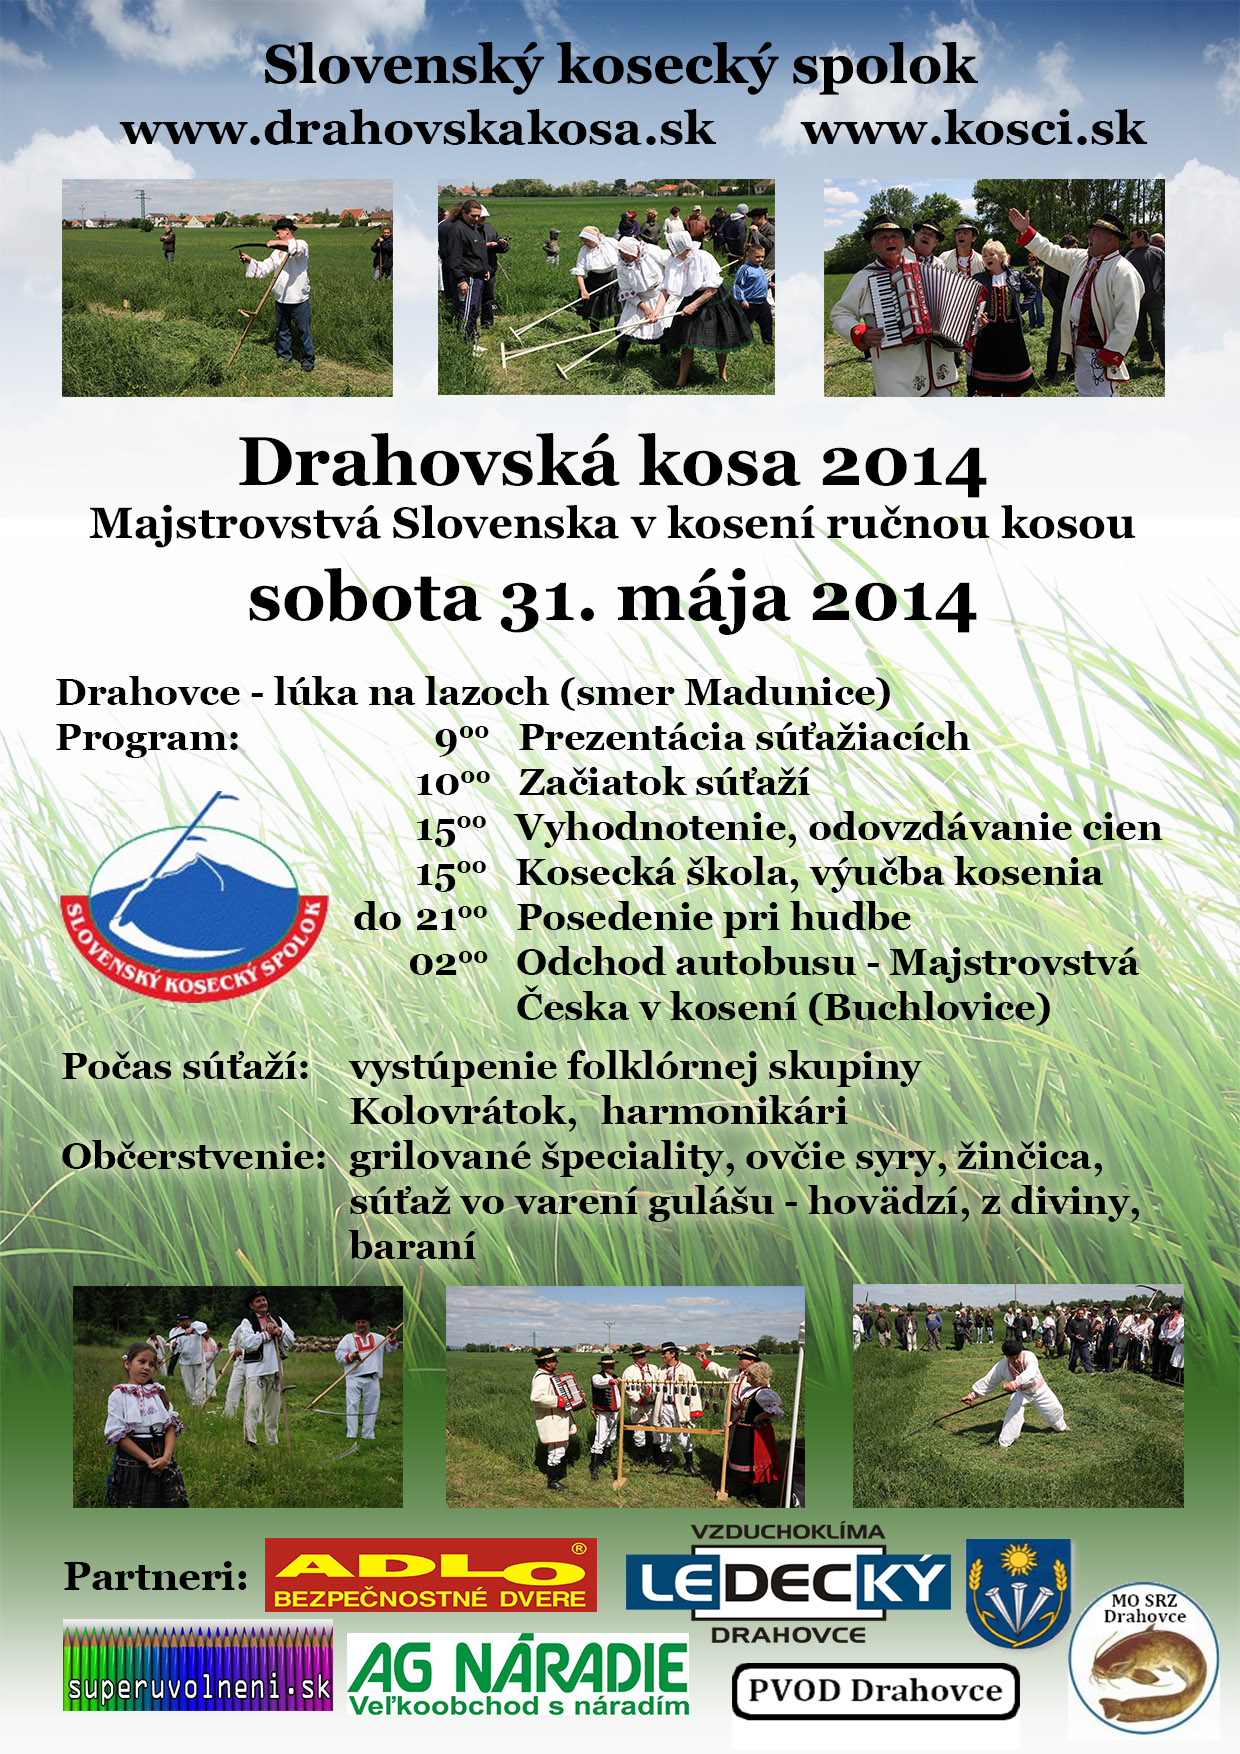 Drahovsk kosa 2014 Drahovce - 3. ronk